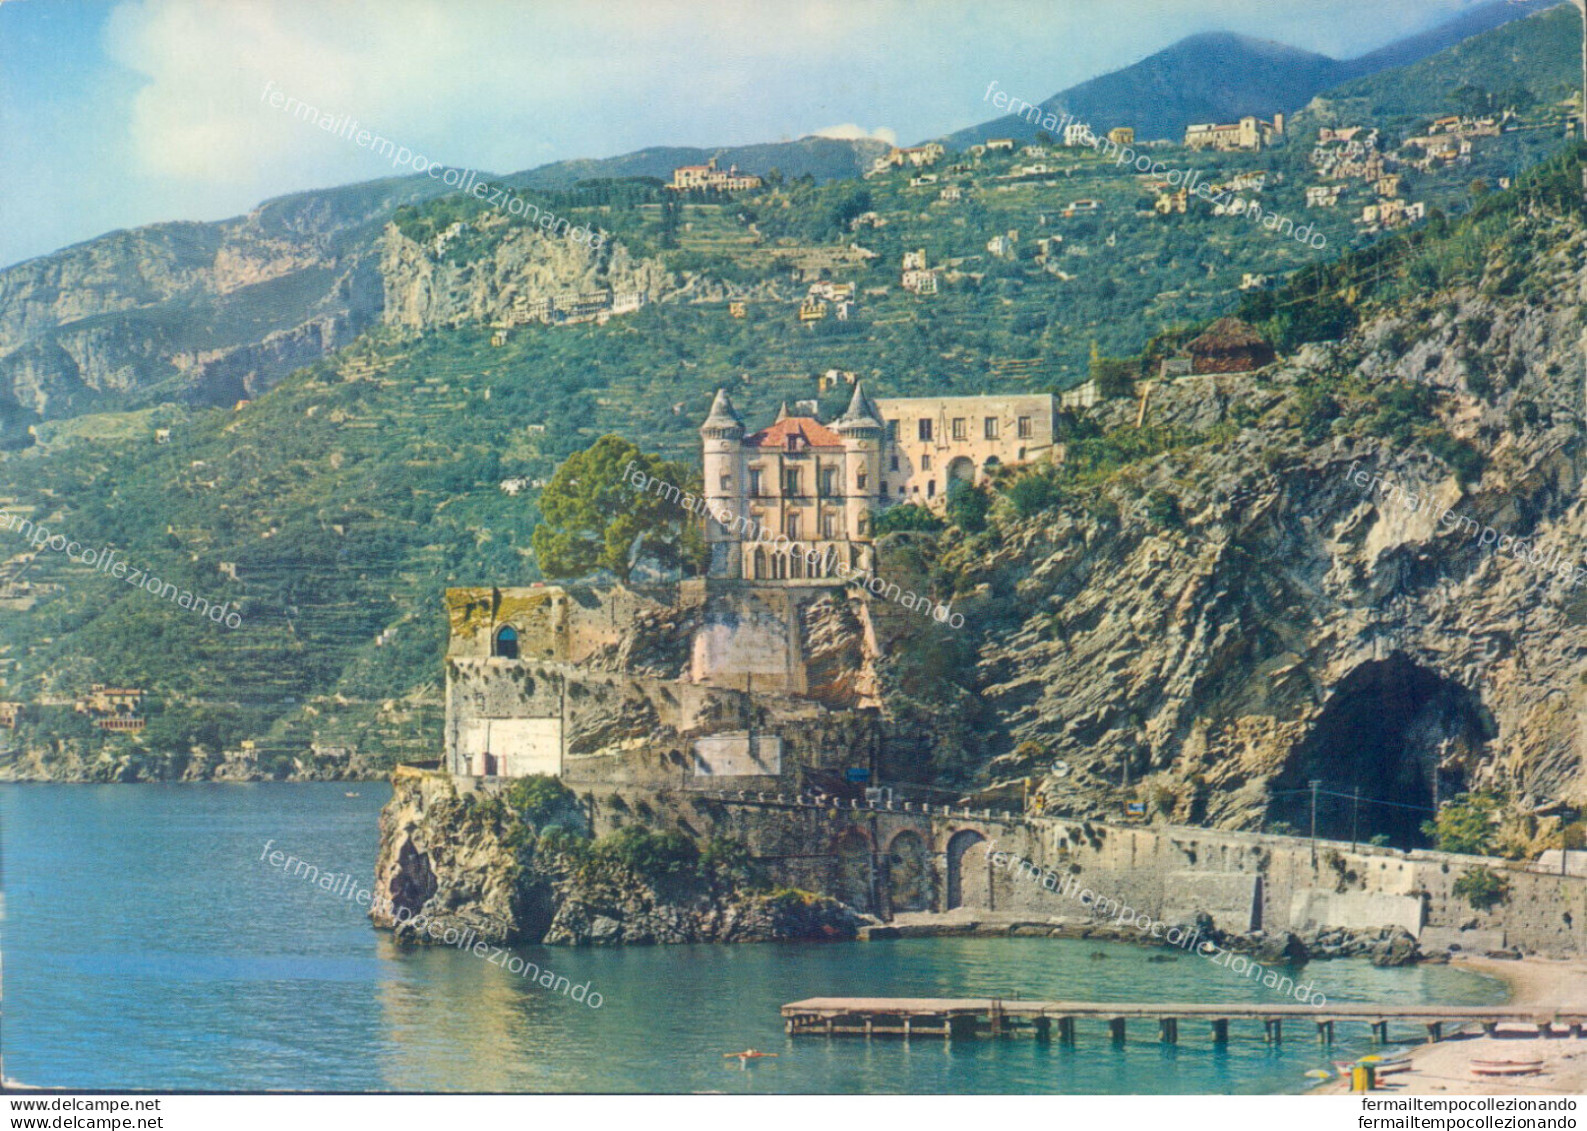 Aa249 Cartolina Maiori Provincia Di Salerno - Salerno